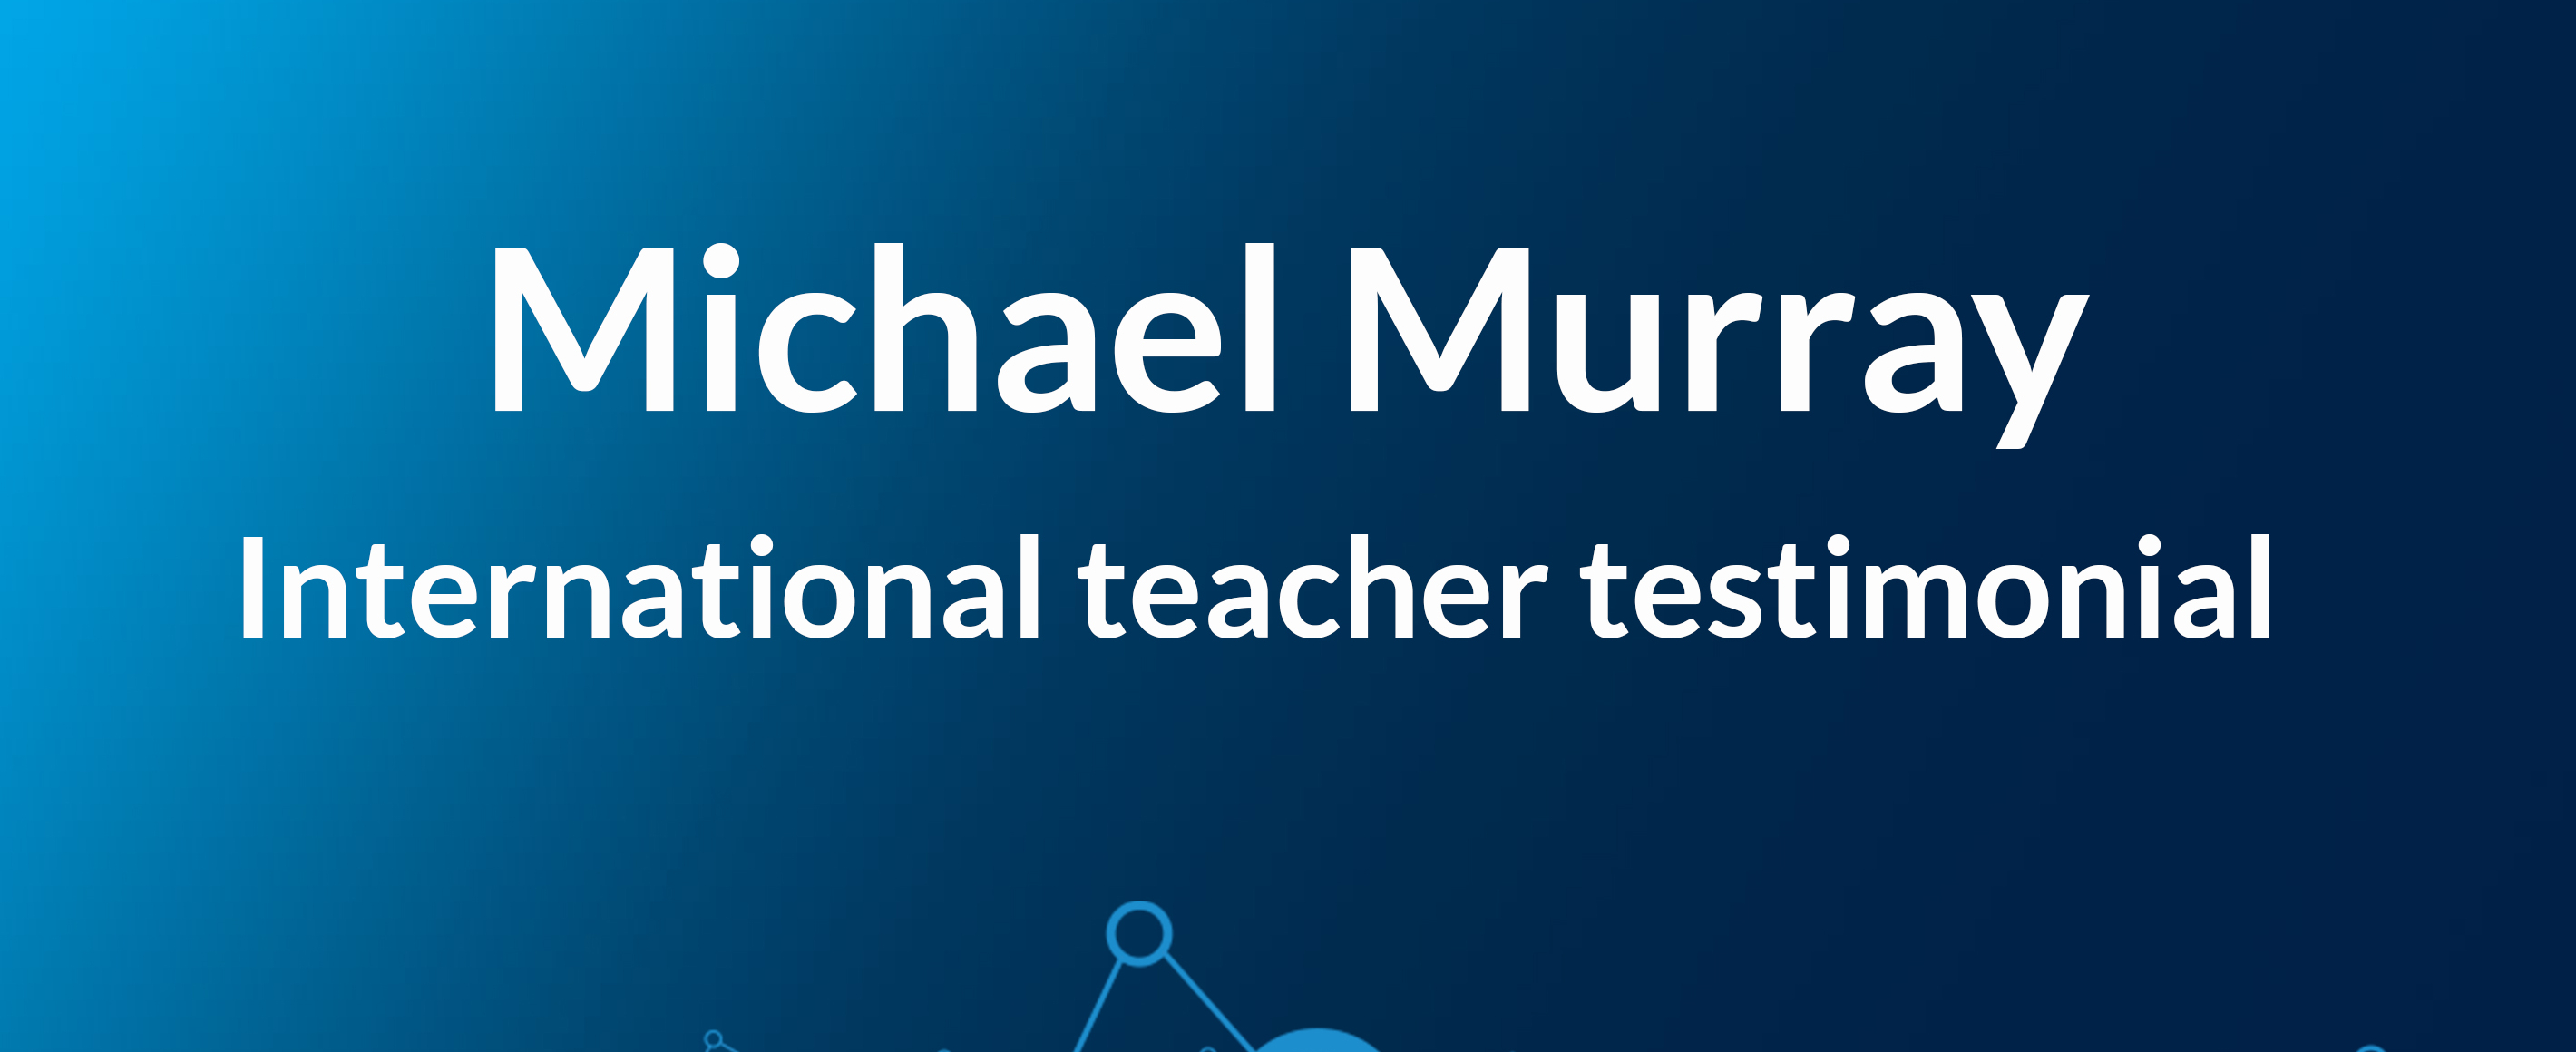 Michael Murray testimonial blog image